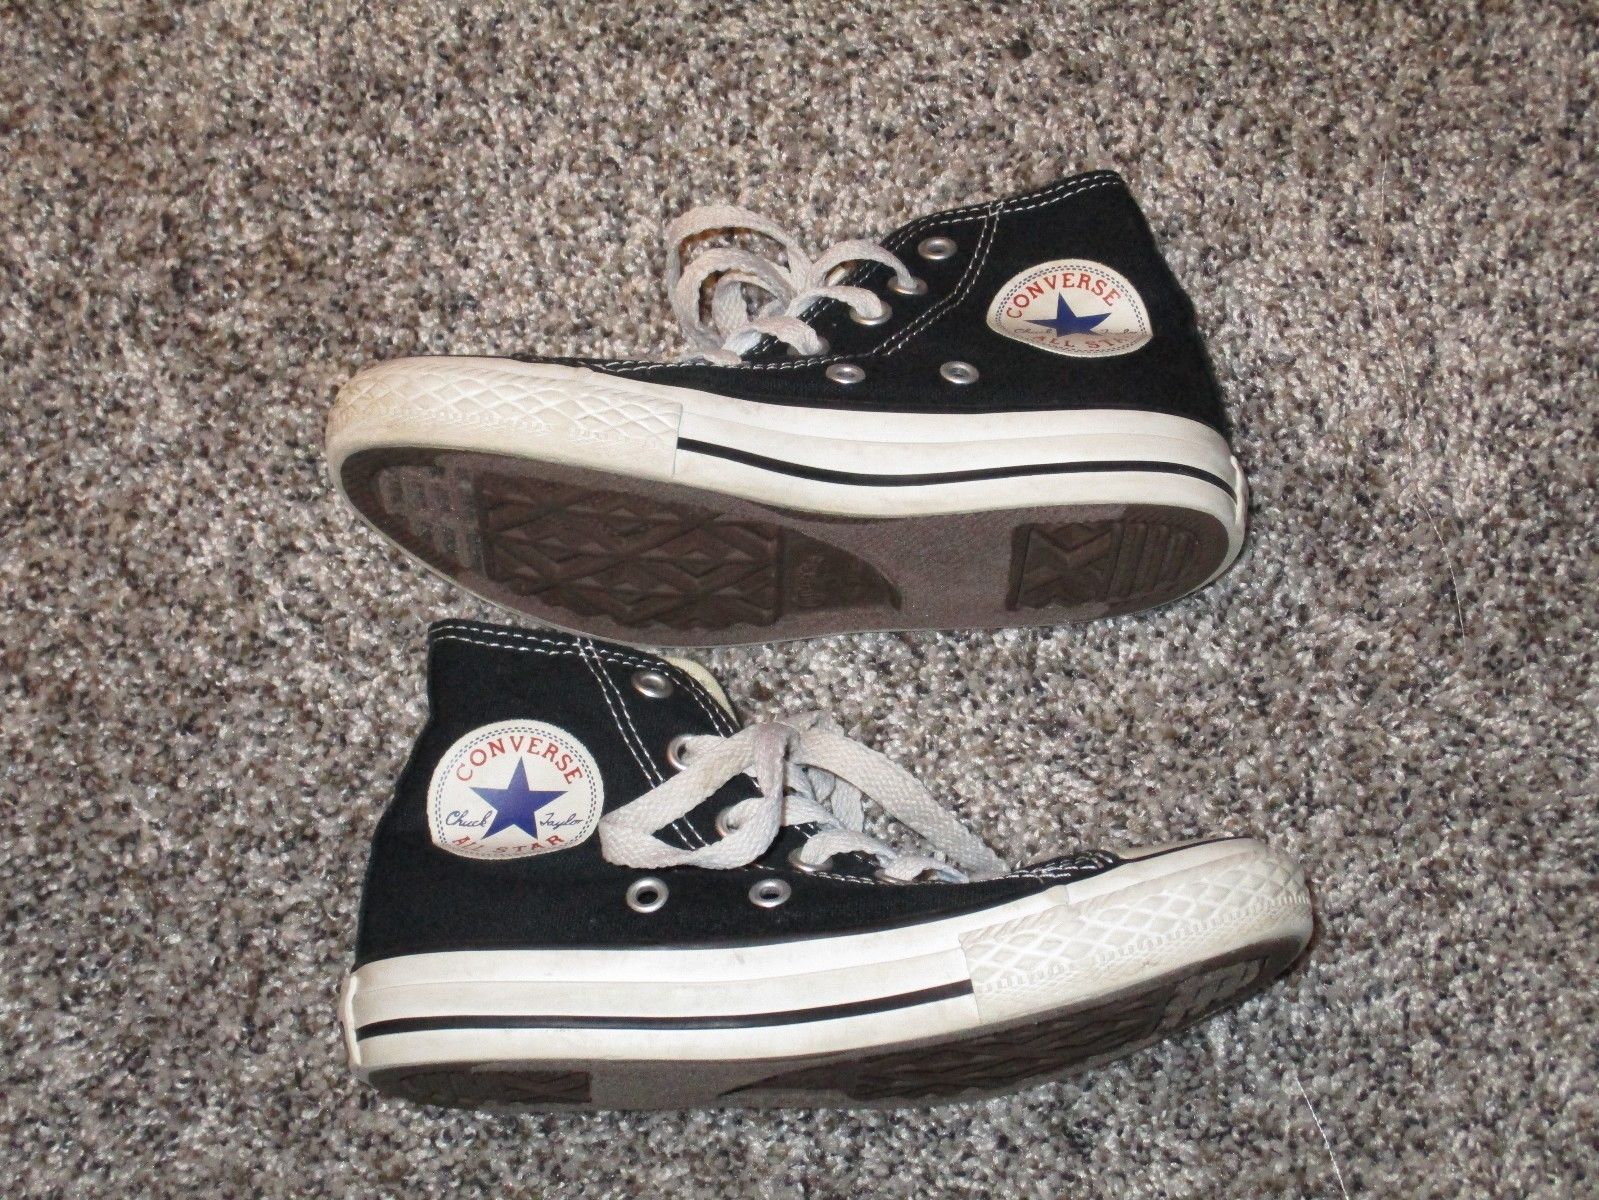 white converse size 12